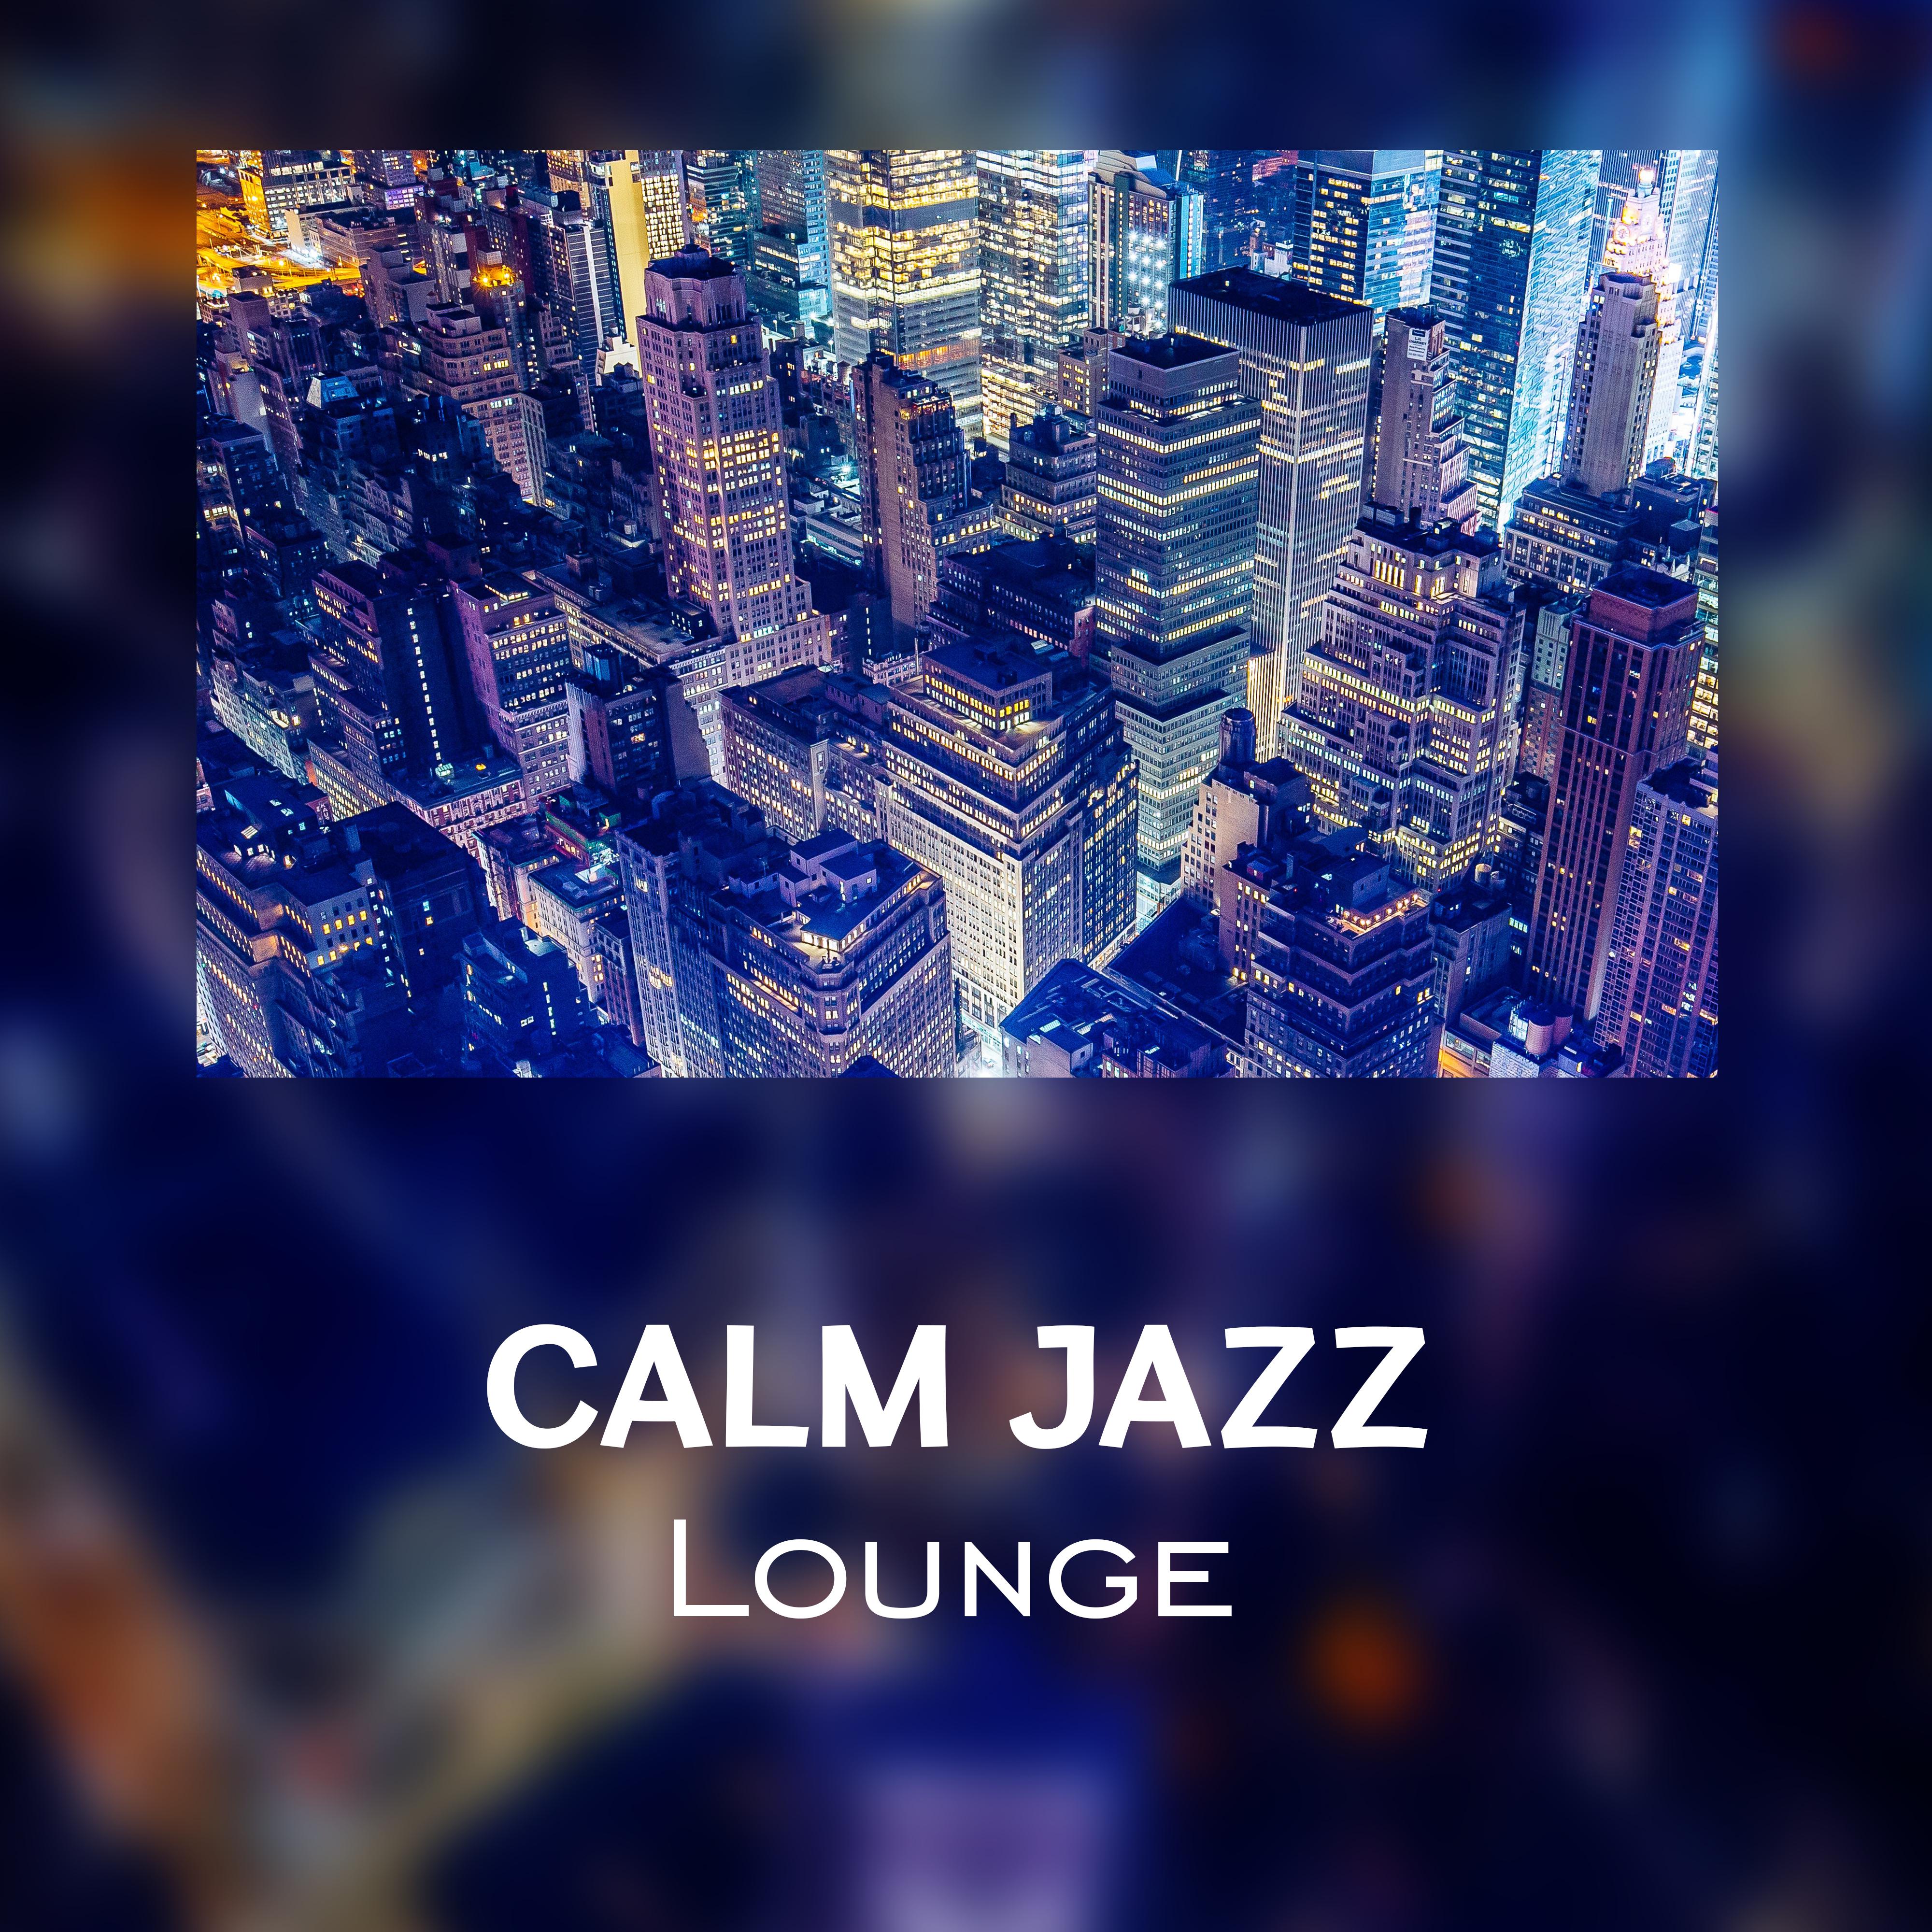 Calm Jazz Lounge – Soothing Jazz Compilation, Instrumental Music, Lounge 2017